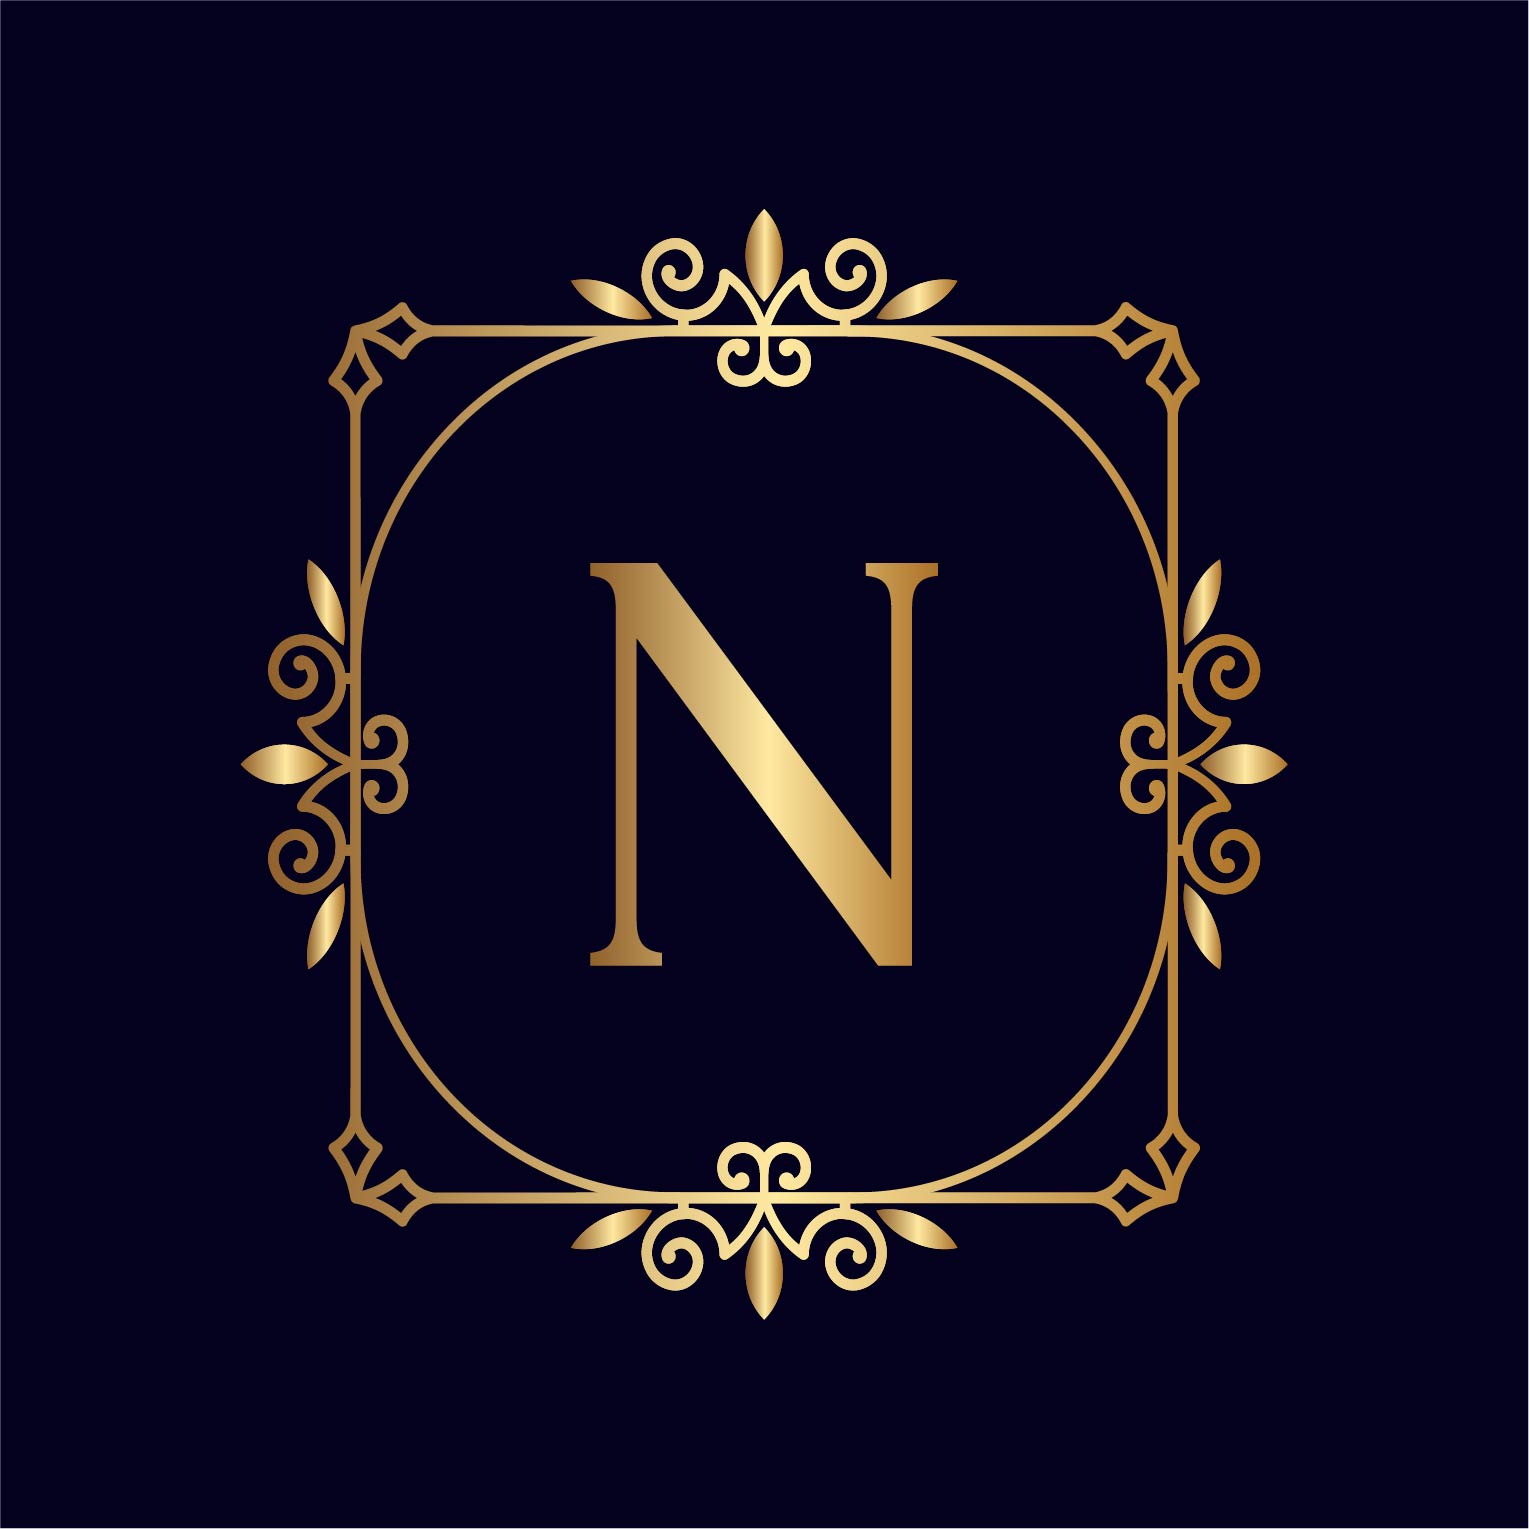 Artistic Gold Letter N Logos Design preview image.